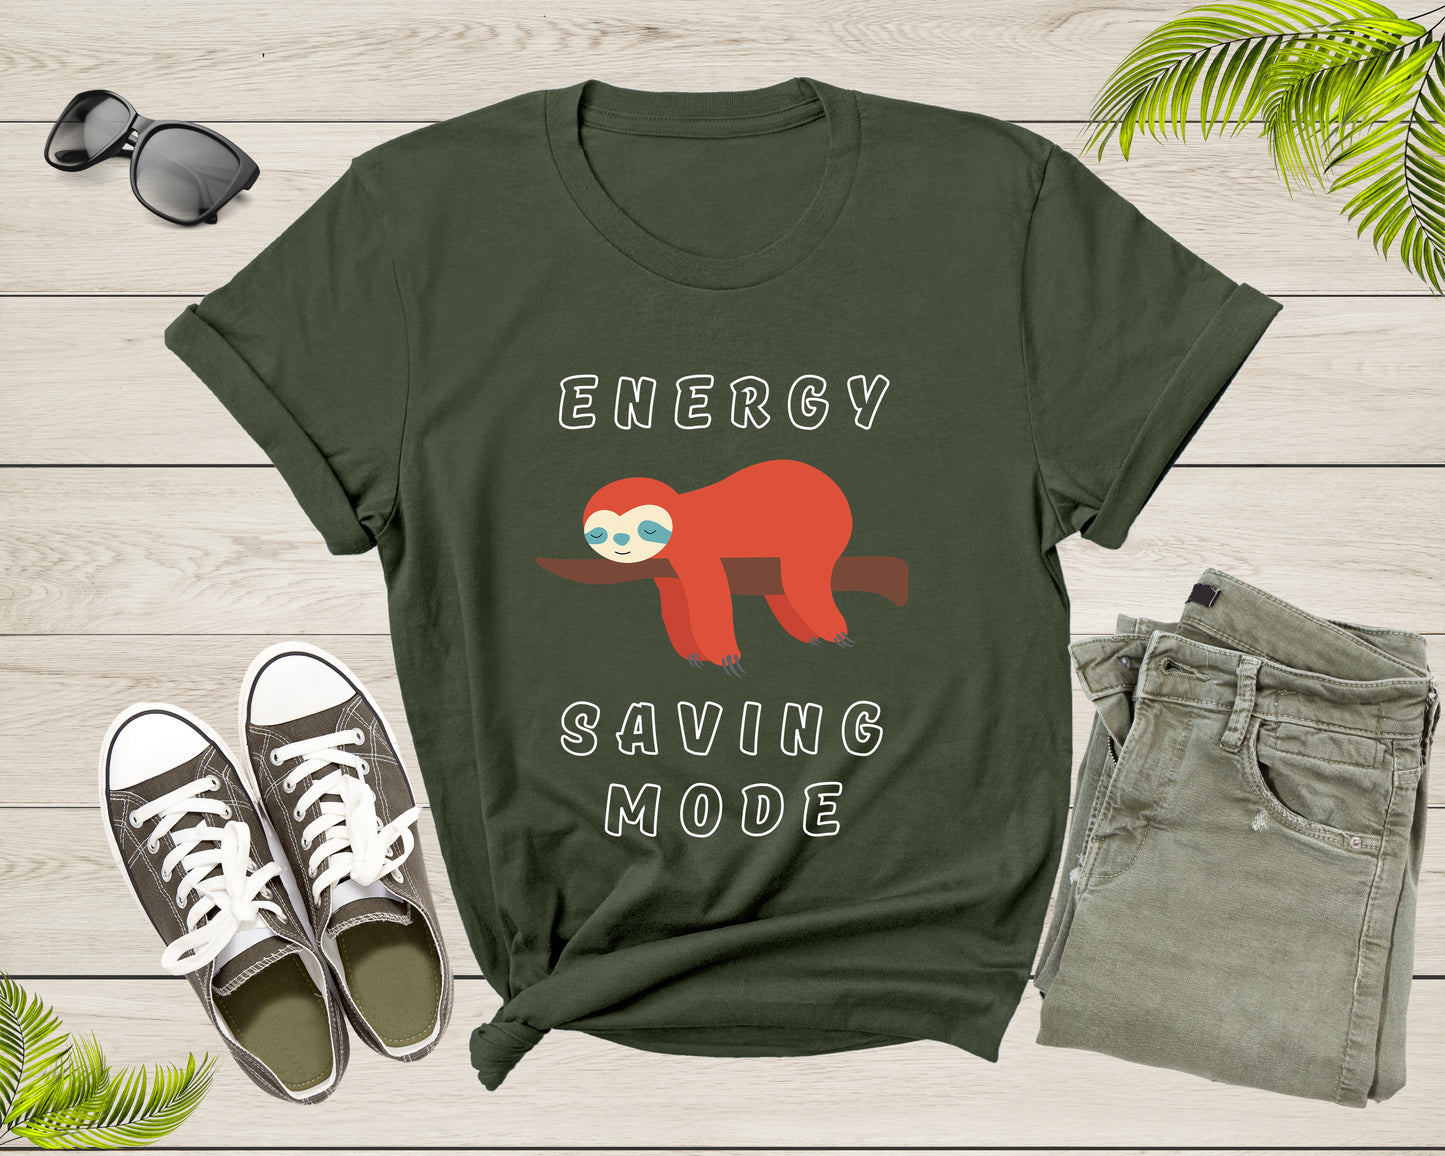 Cute Cool Lazy Tree Sloth Sleeping Animal Energy Saving Mode T-Shirt Sloth Lover Gift T Shirt for Men Women Kids Boys Girls Graphic Tshirt